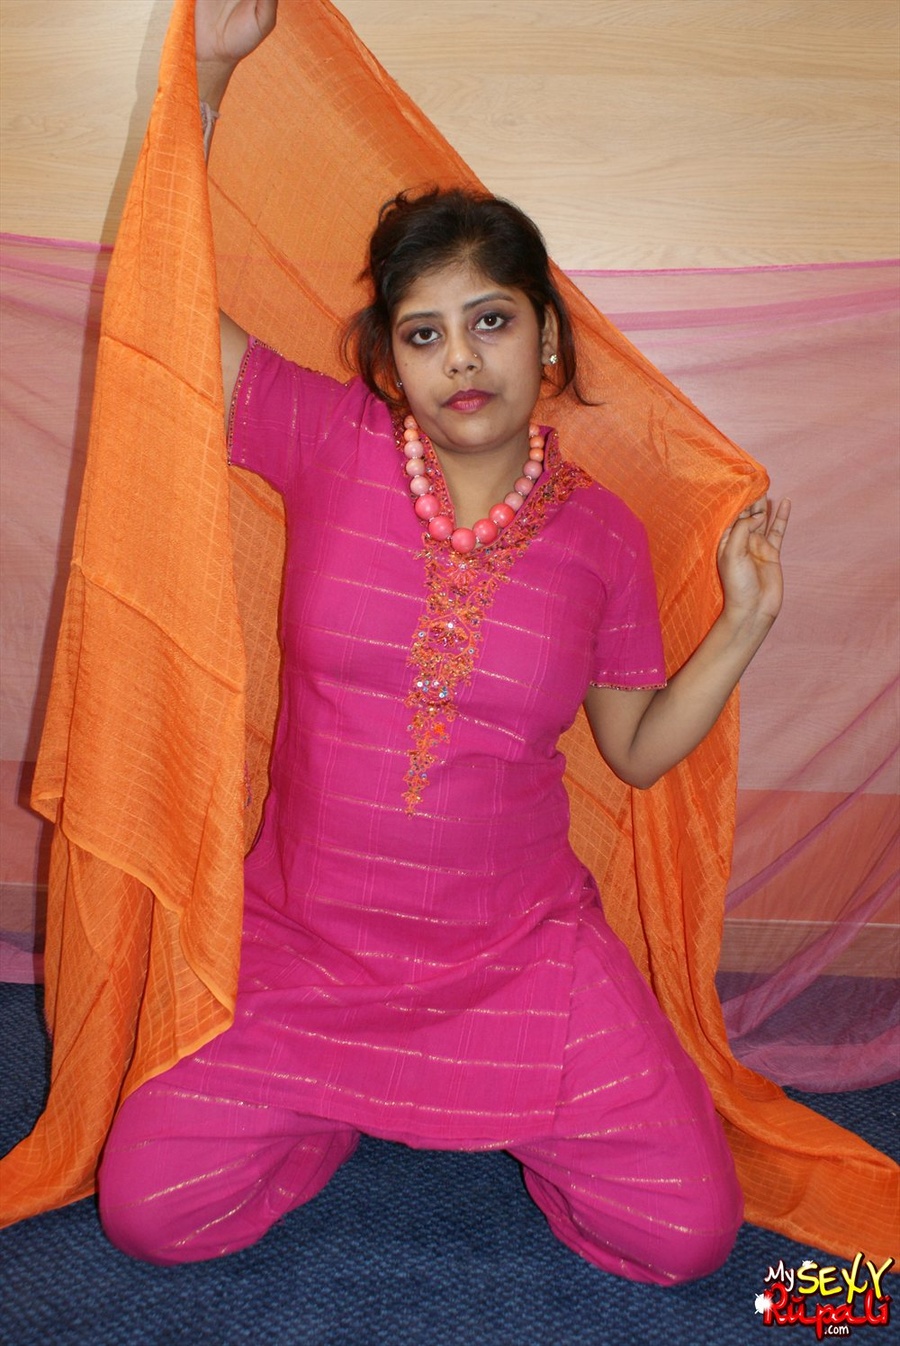 Indian slut taking off her pink sari to get nude on cam - XXXonXXX - Pic 3